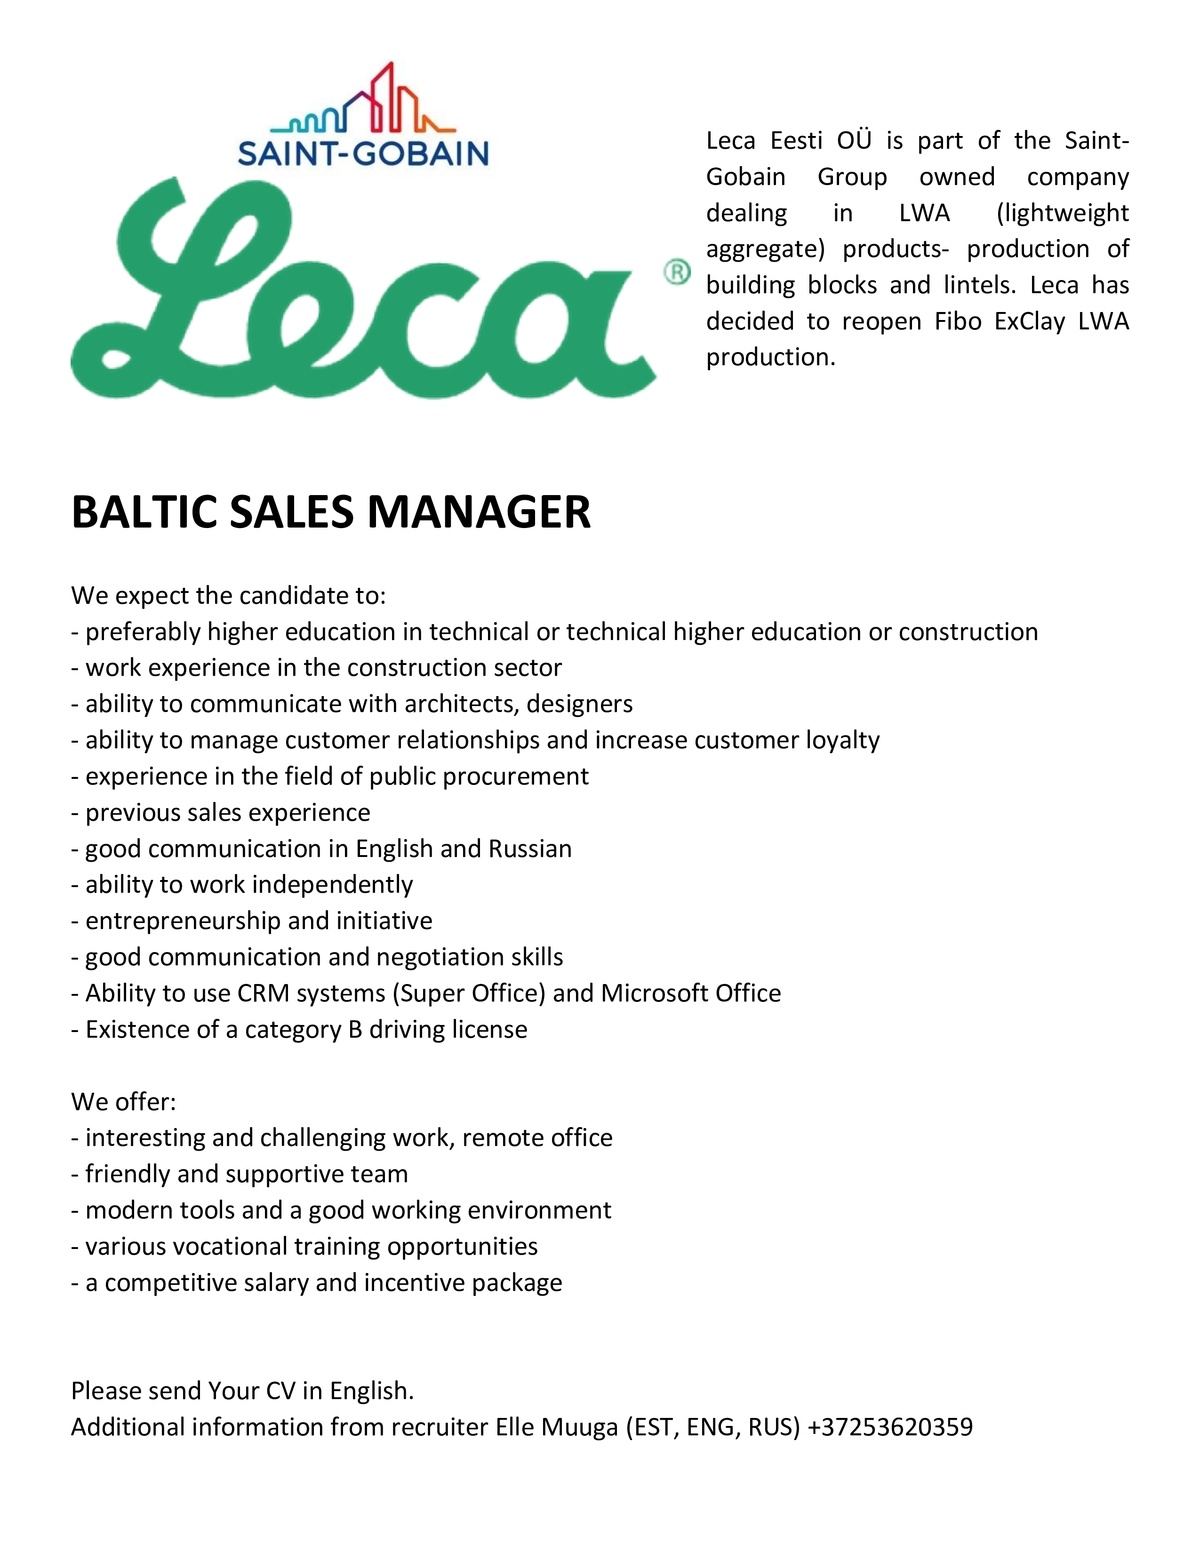 Leca Eesti OÜ (SAINT-GOBAIN) LWA Baltic Sales Manager